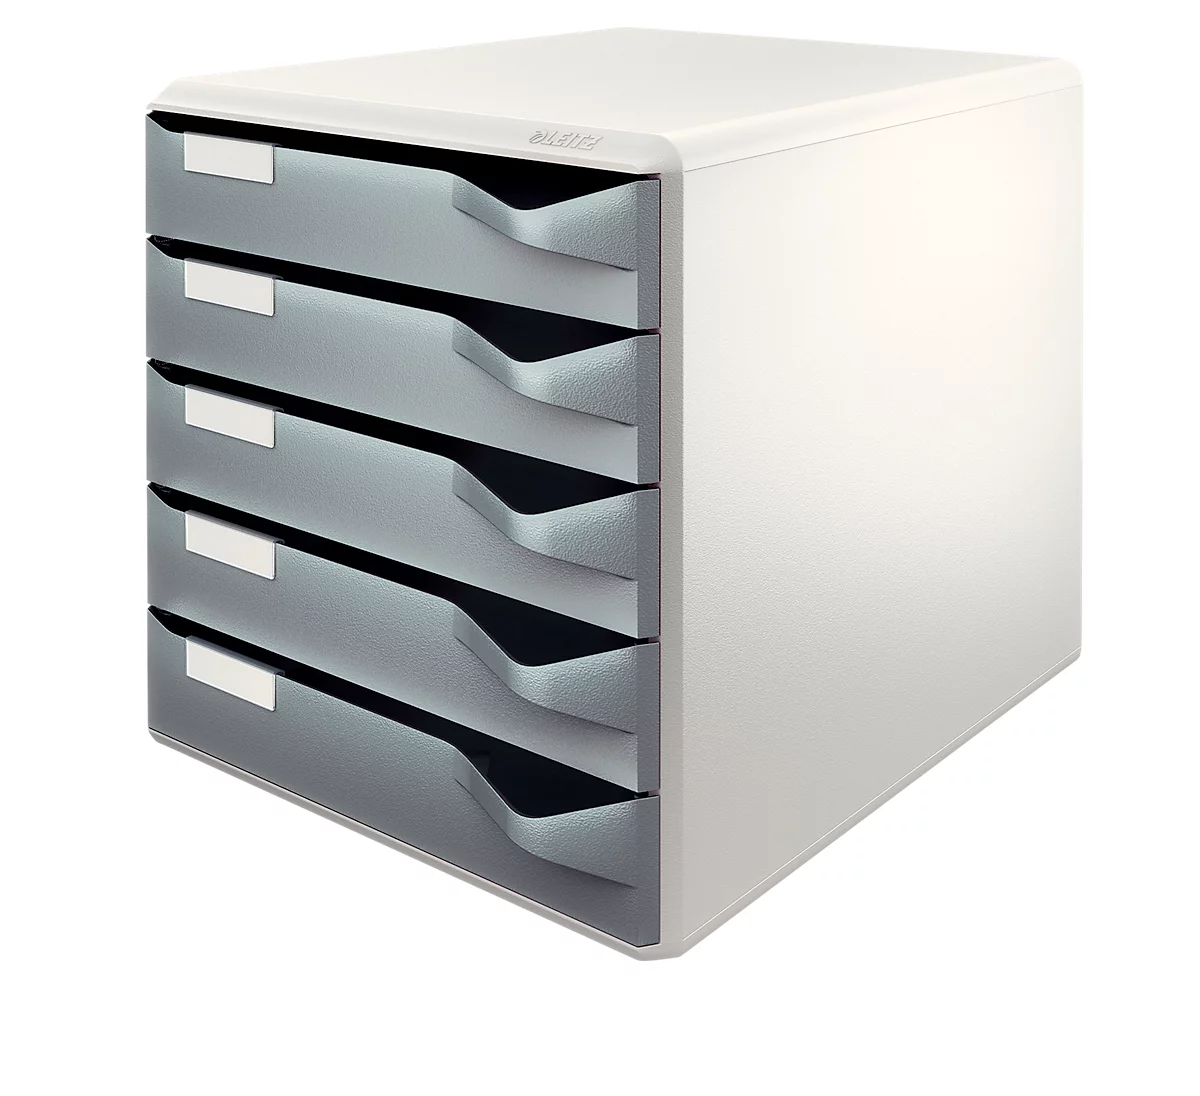 Boîte à tiroirs LEITZ®, 5 tiroirs, format A4, polystyrène, gris clair/gris